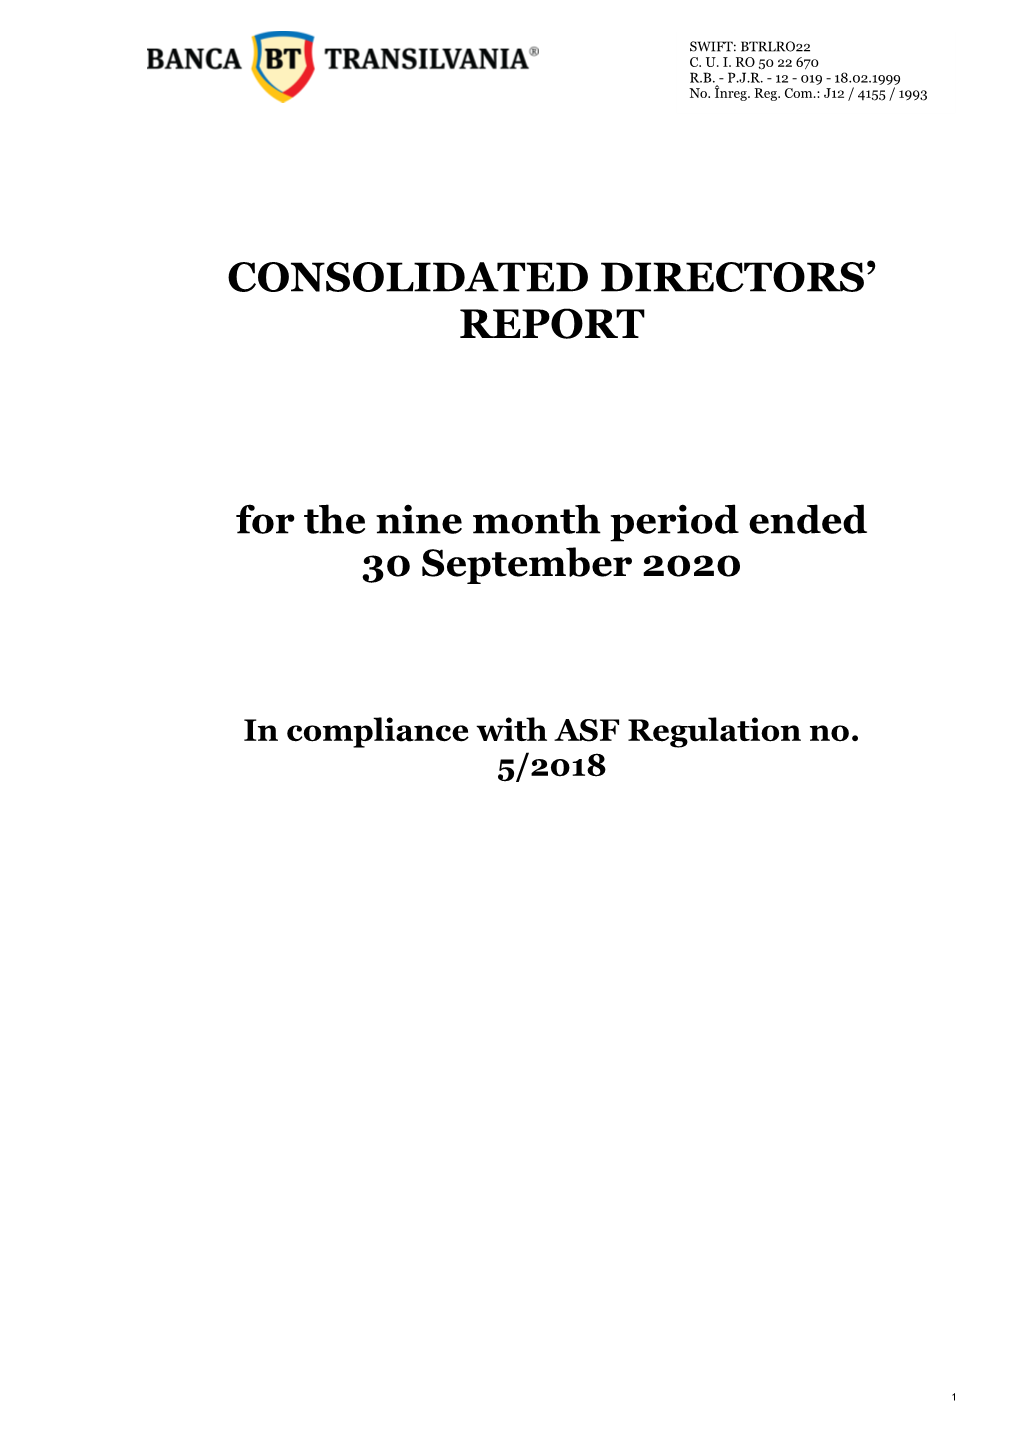 Consolidated Directors' Report